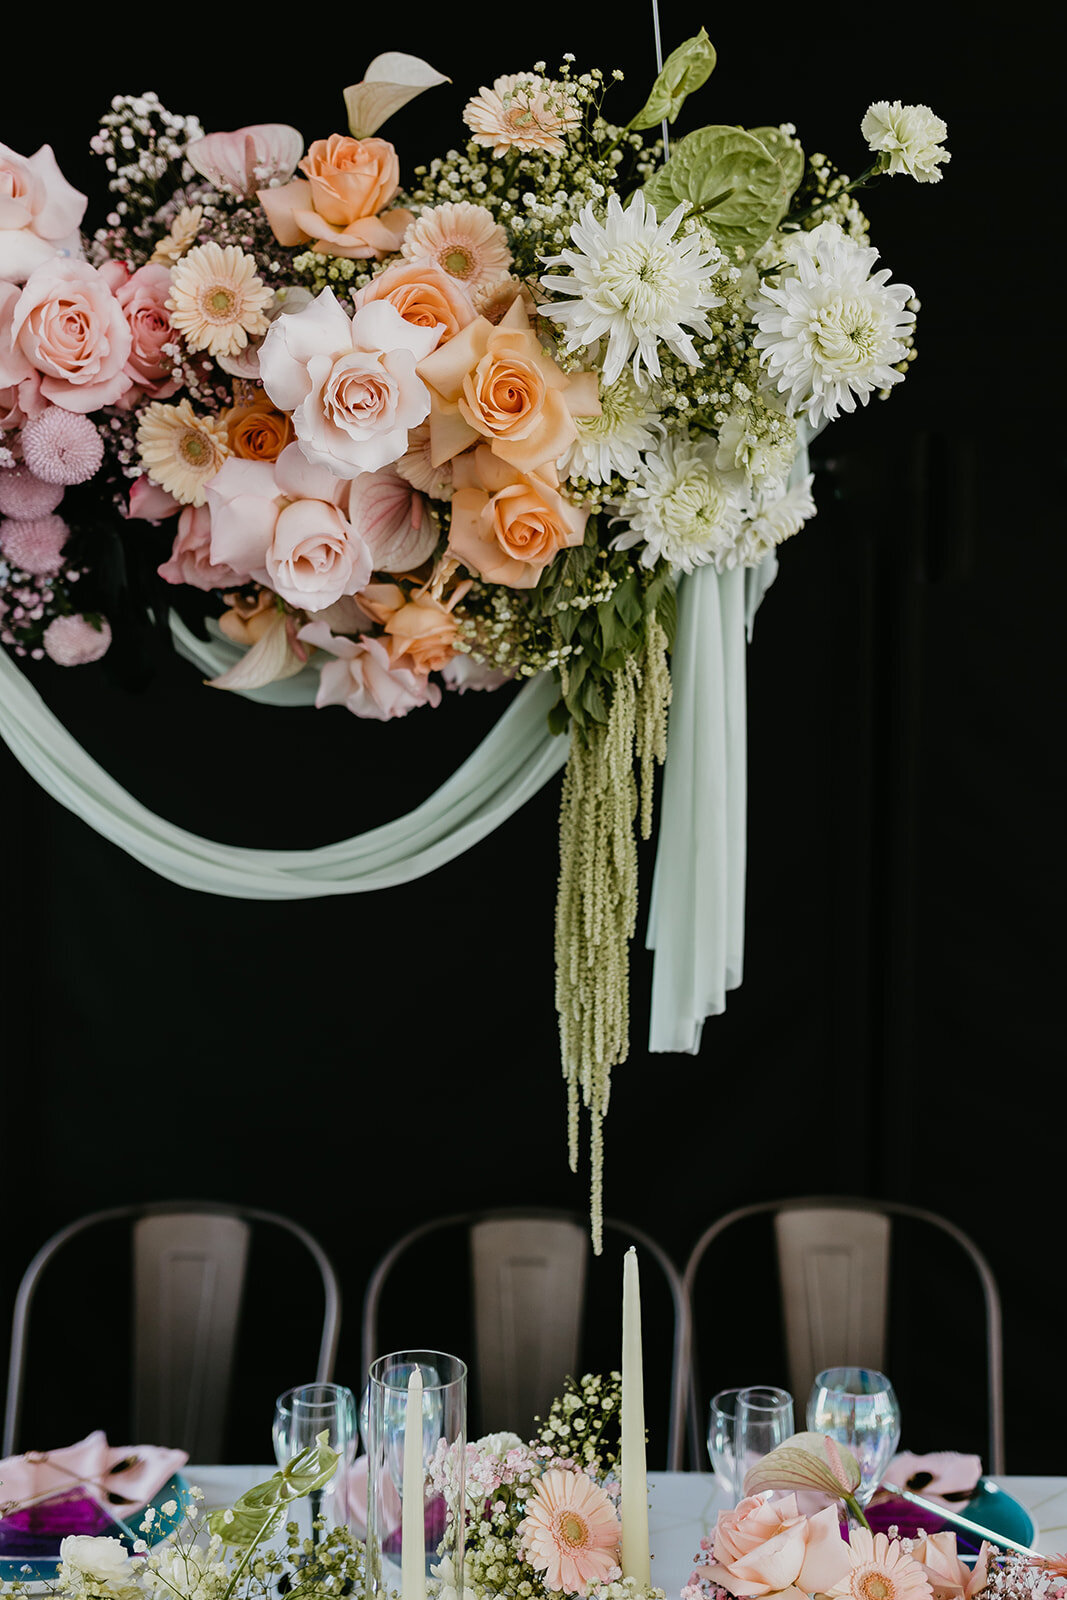 Rebekah Brontë Designs - Creative & Bold Wedding Designer from Alberta - bold technicolour wedding design by RB Designs at 52 North Venue in Sylvan Lake, photo by Nikki Collette Photography